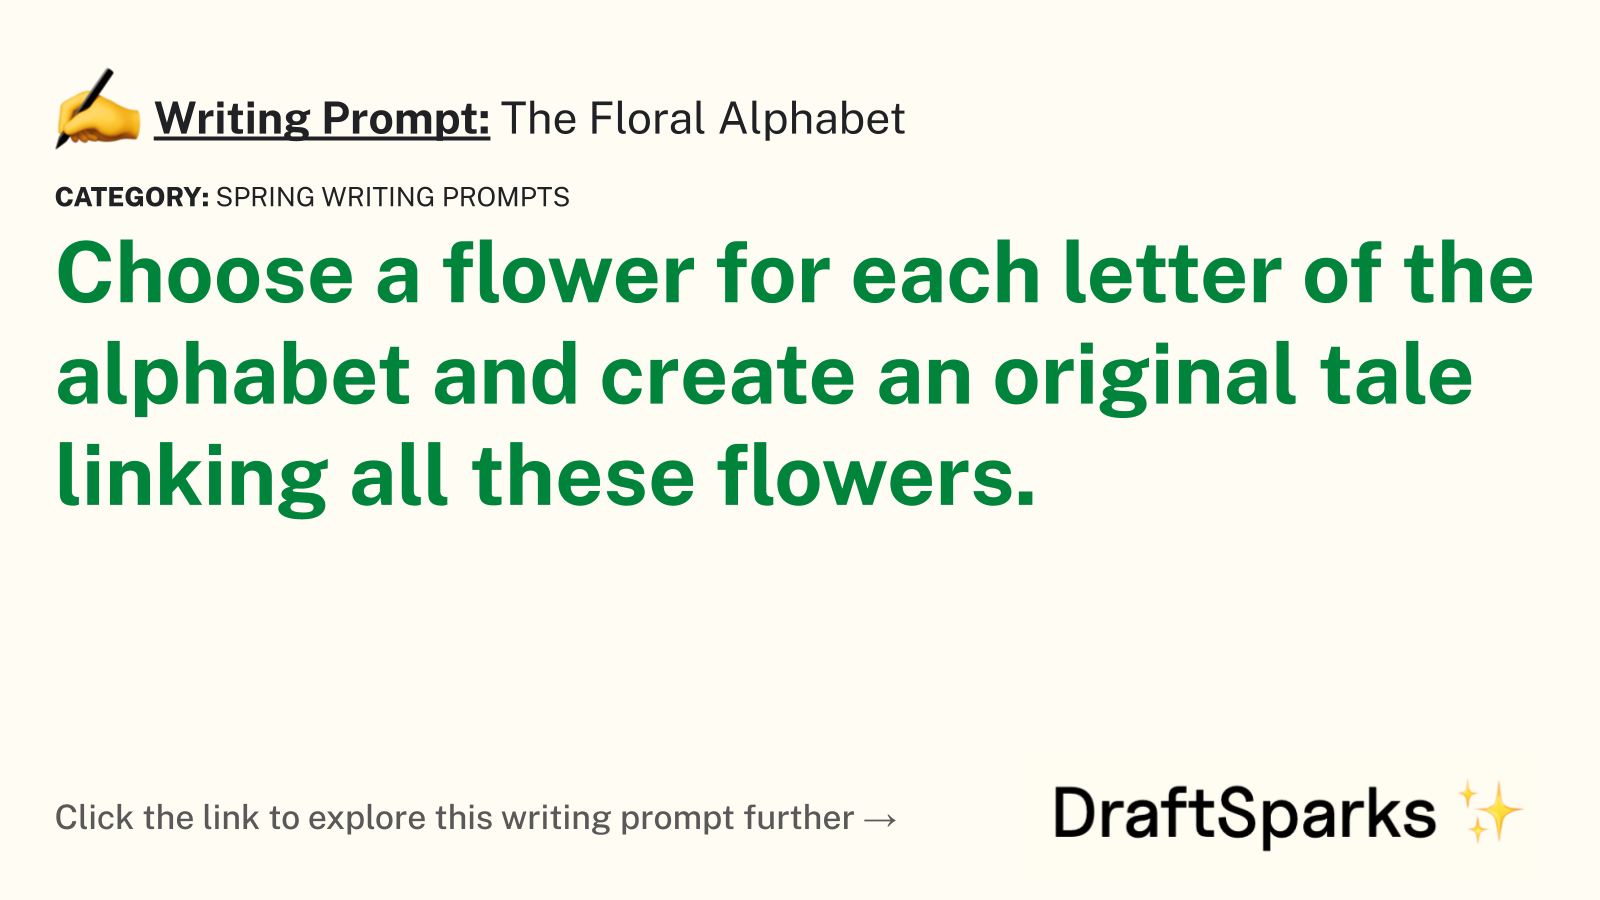 The Floral Alphabet